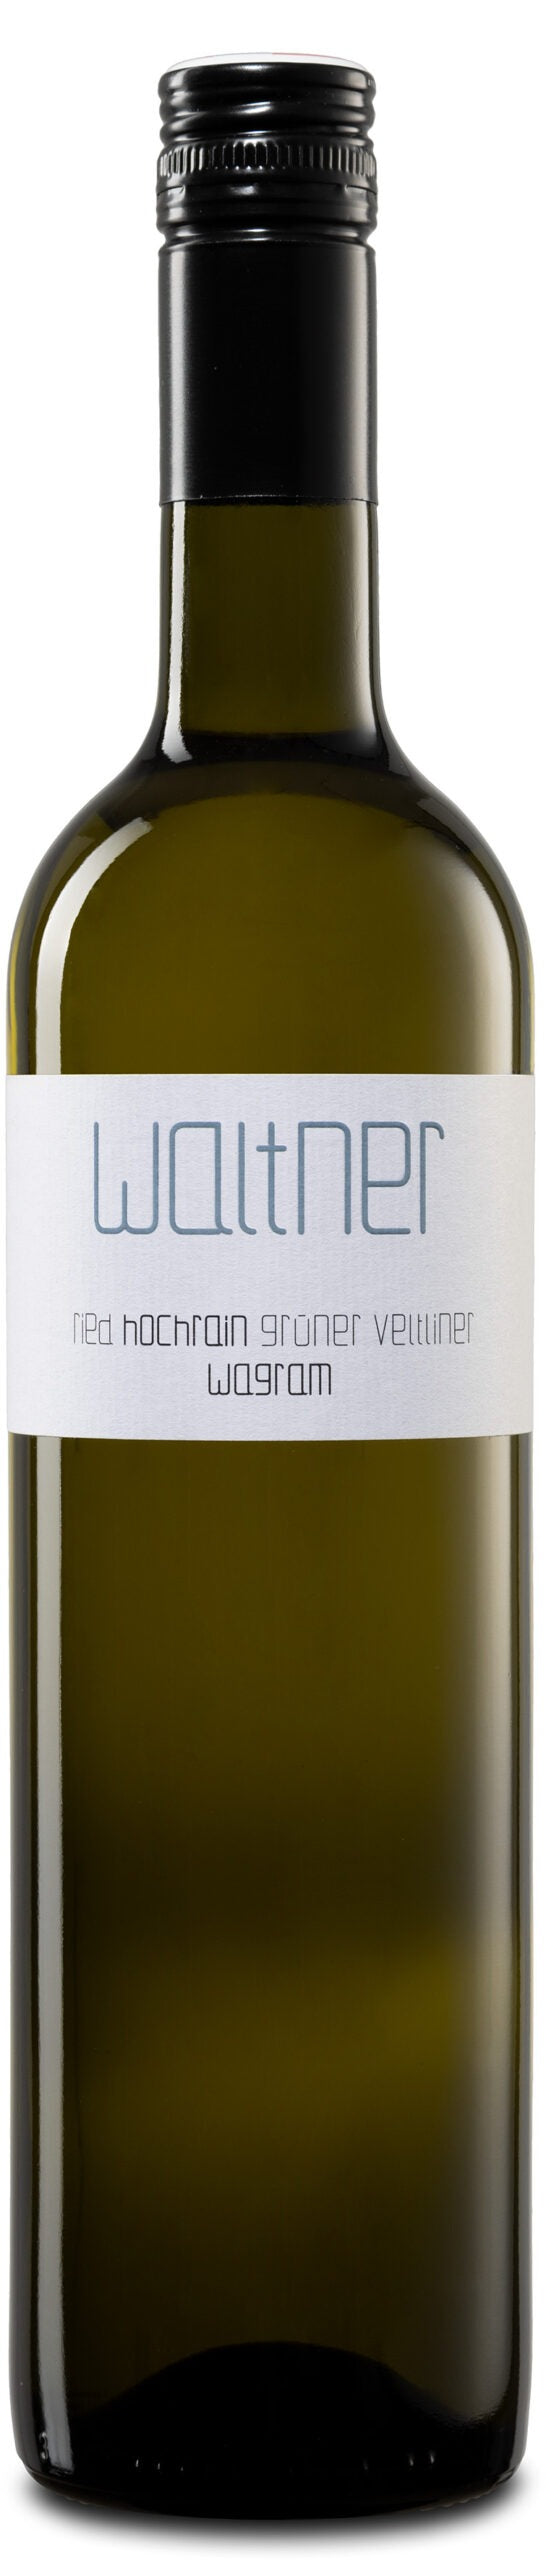 Wijnfles Waltner Gruner Veltliner Hochrain